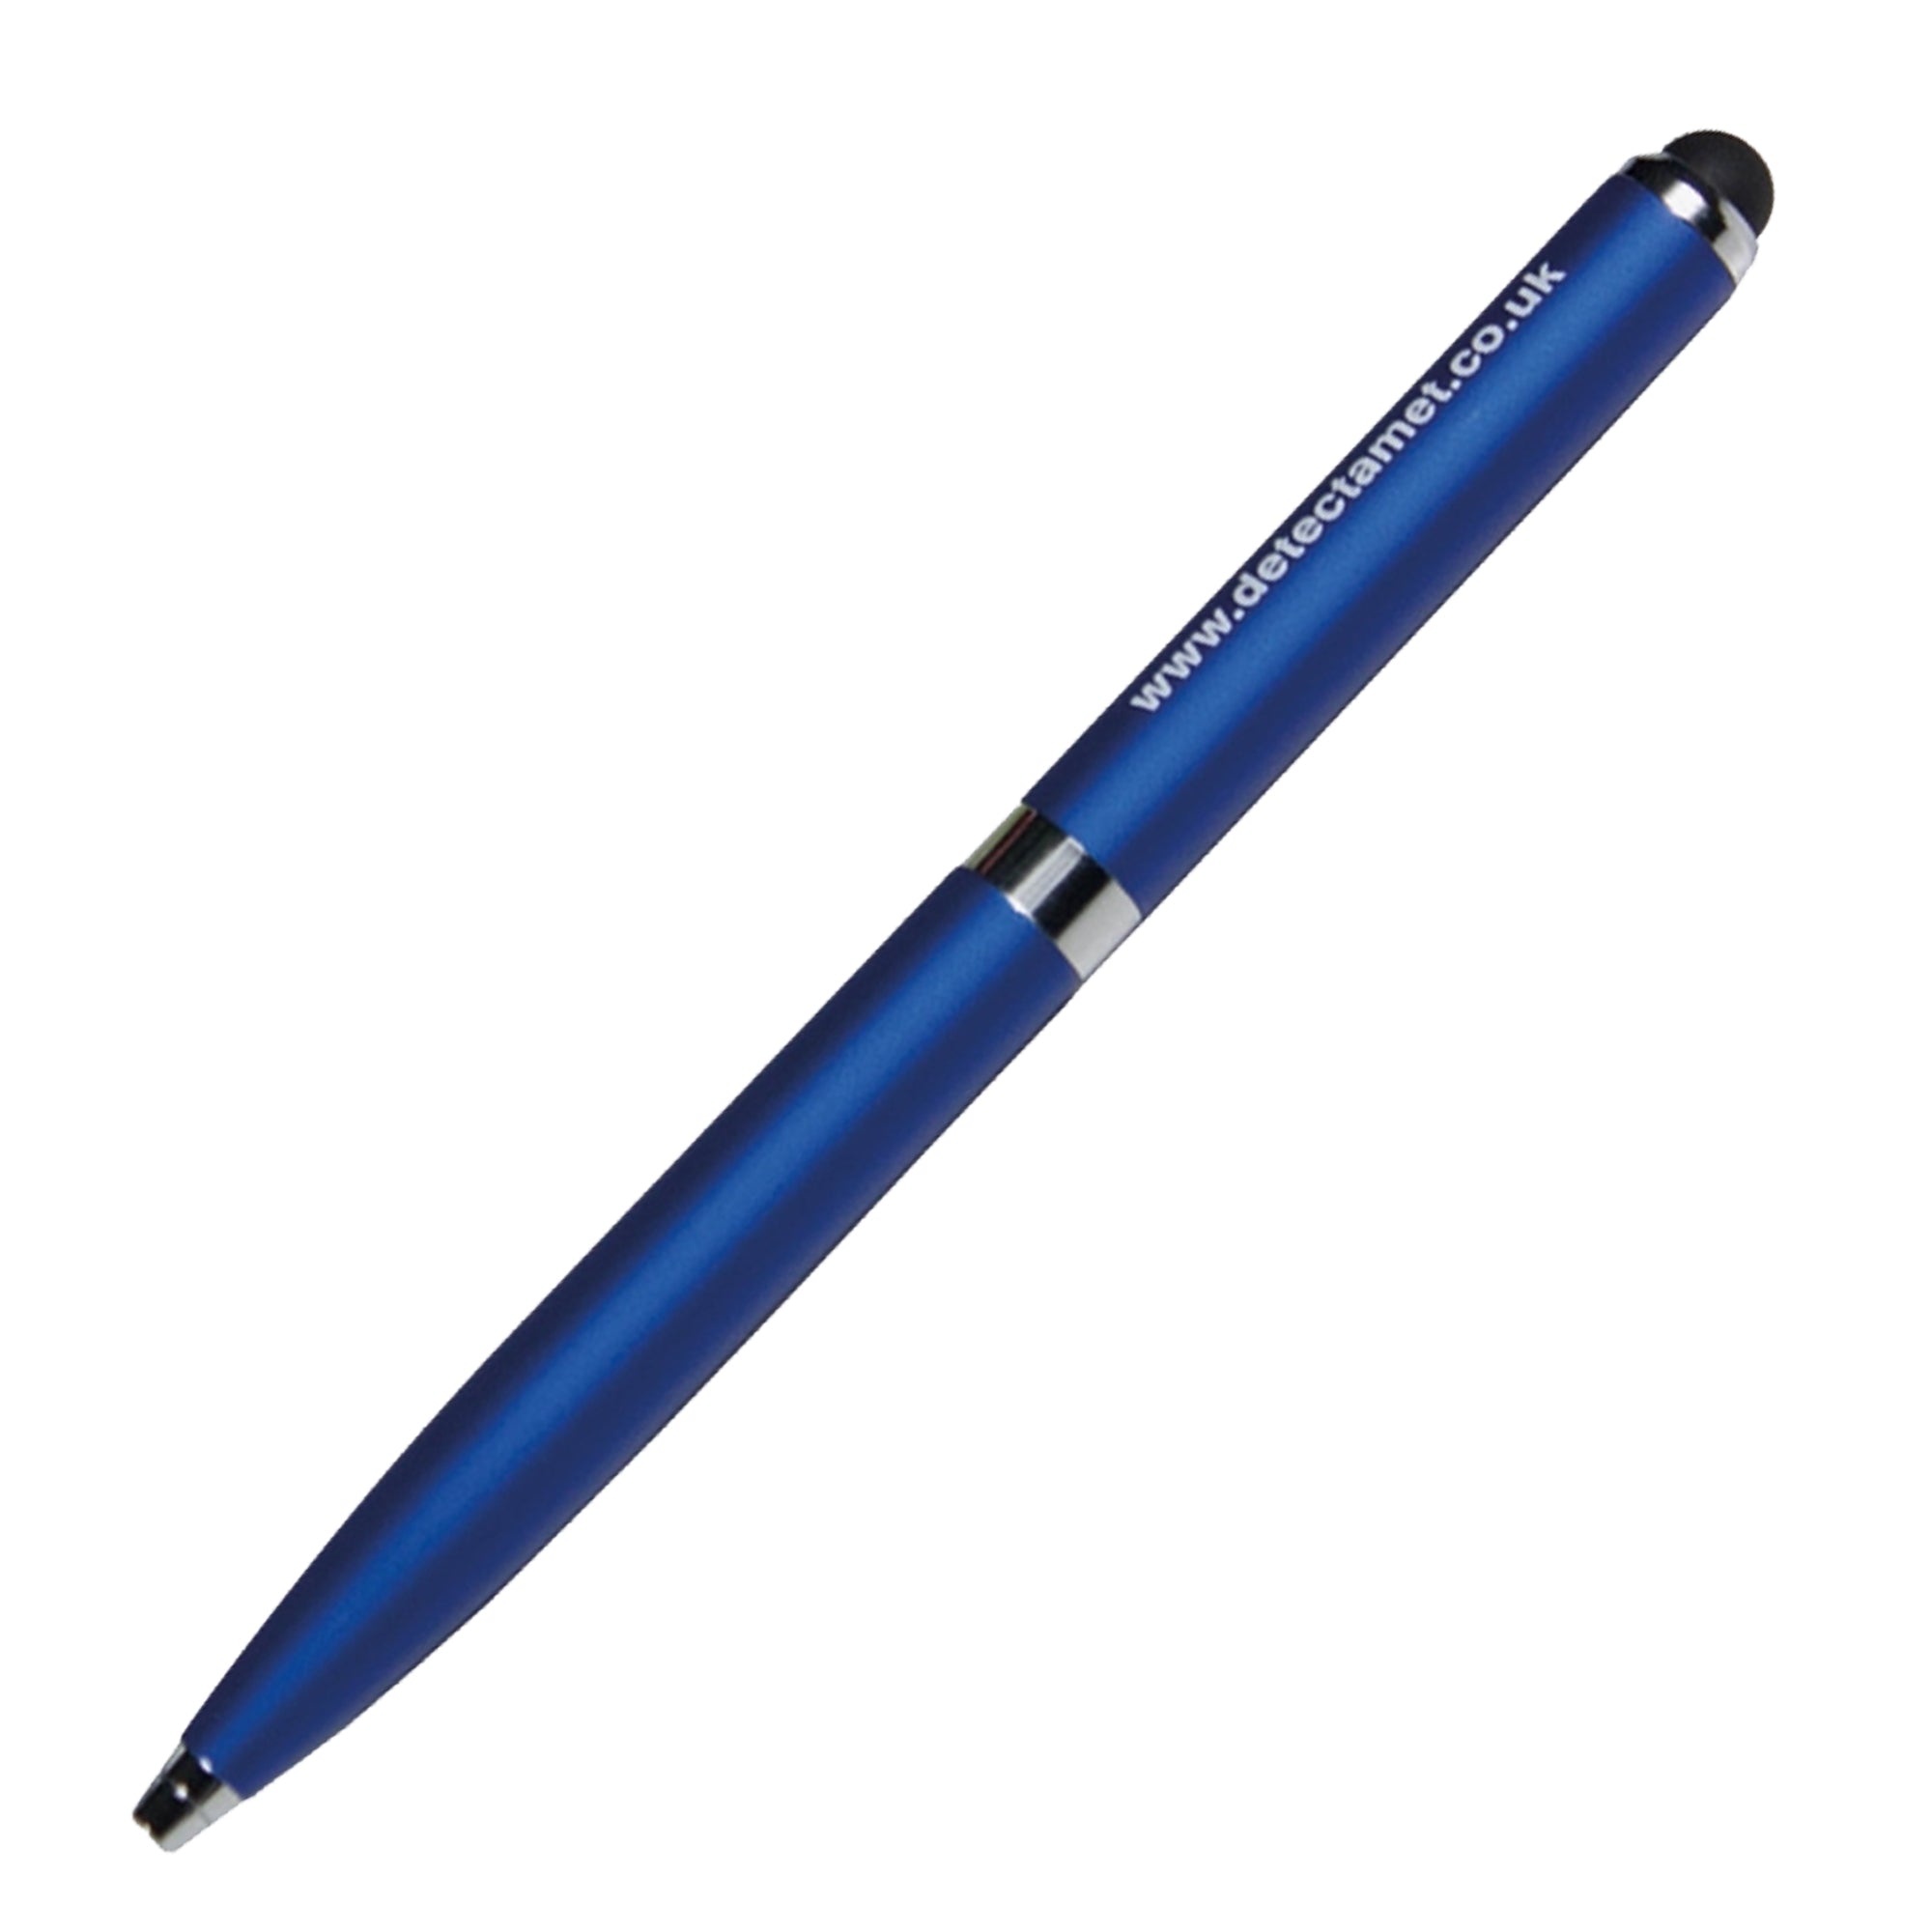 linea-flesh-penna-detectabile-retrattile-2-1-iphone-ipad-tablet-colore-blu